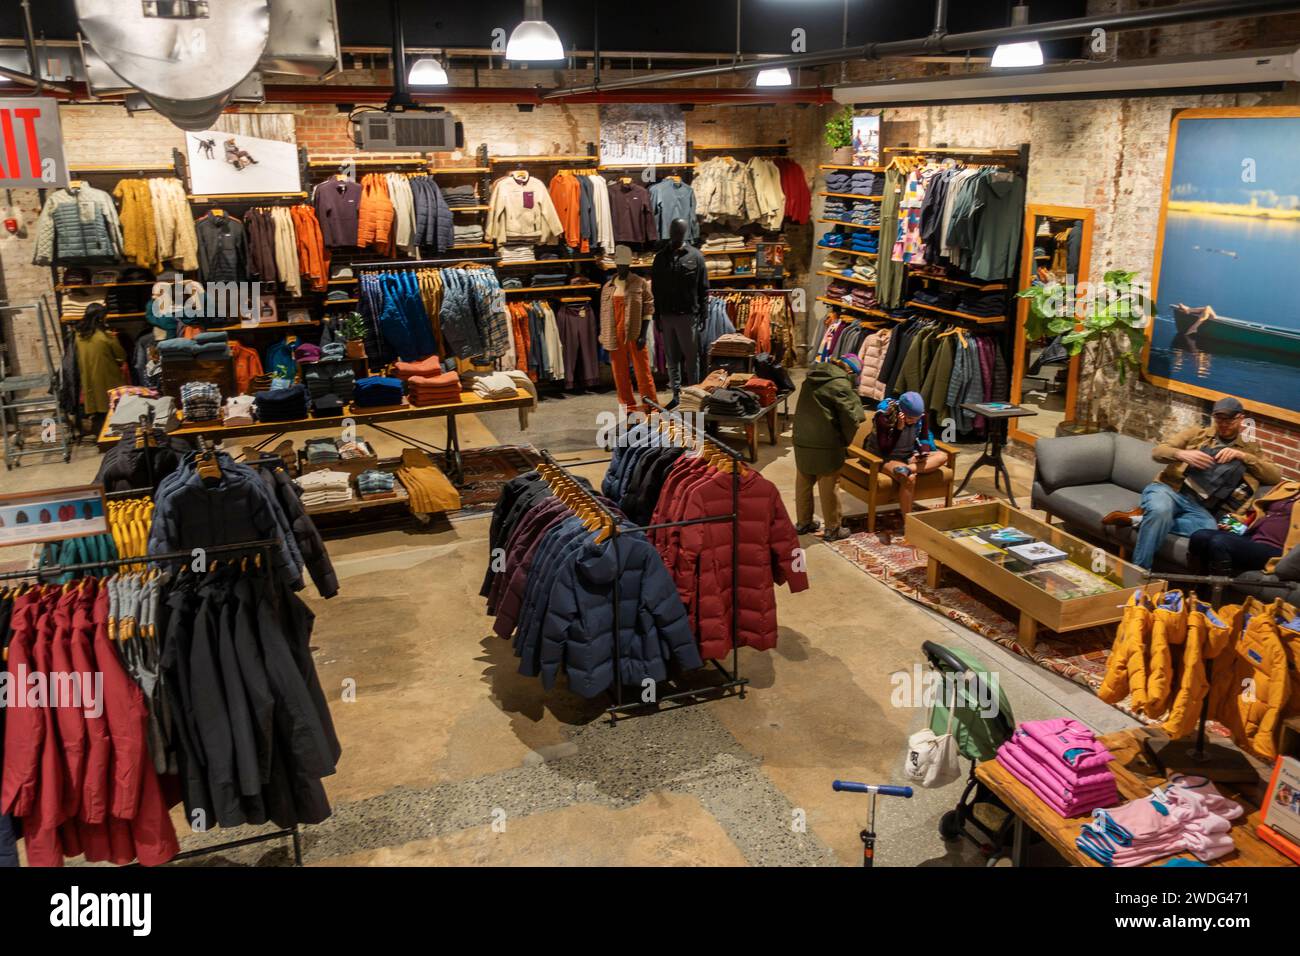 Patagonia store in Williamsburg Brooklyn NYC Stock Photo